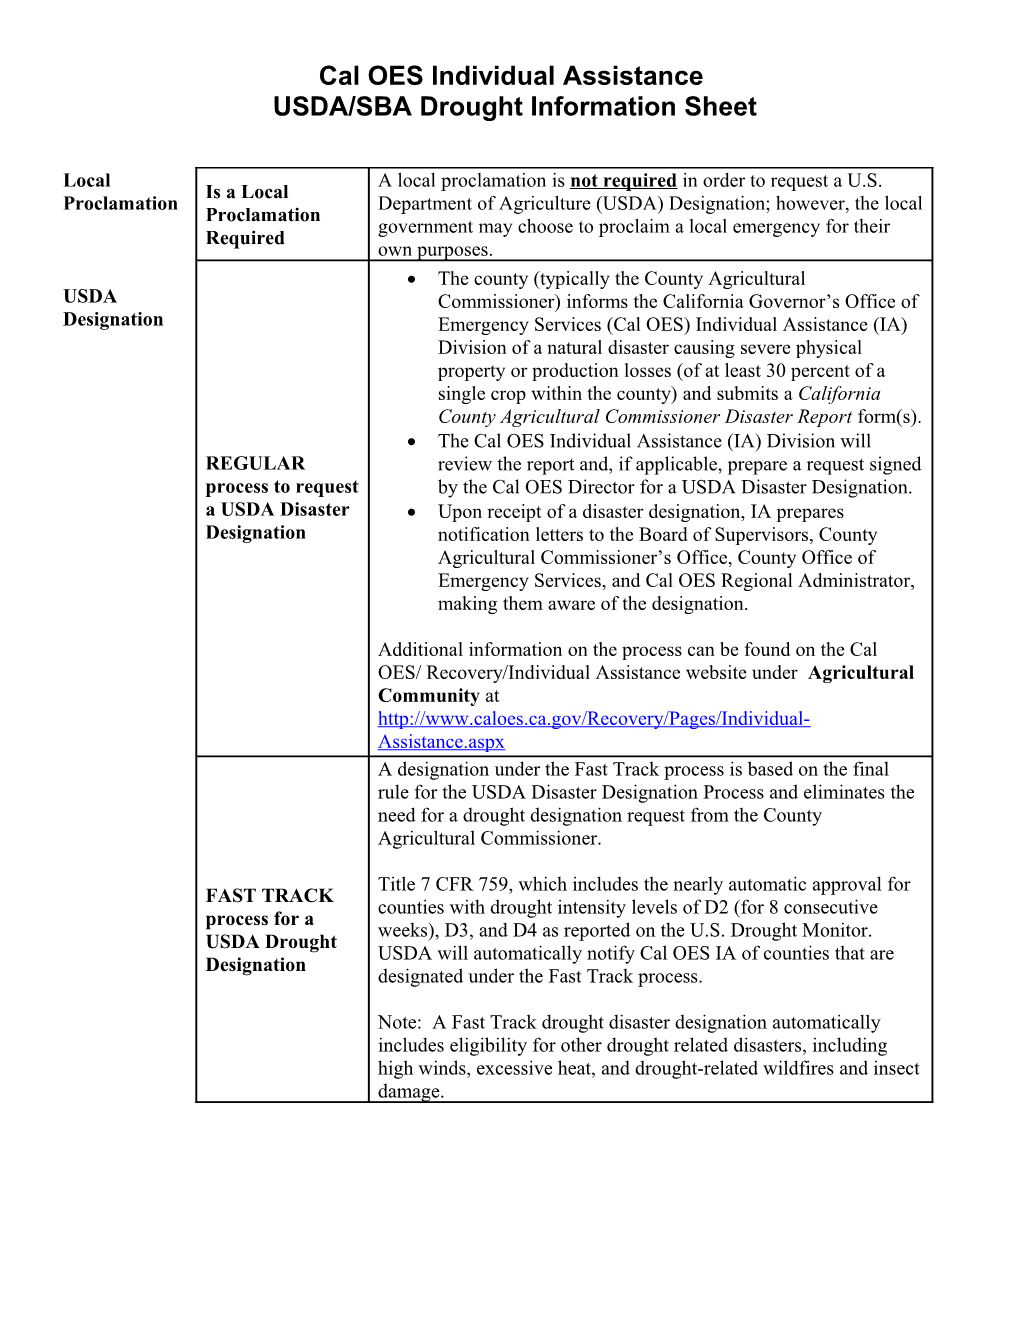 Cal OES IA USDA-SBA Drought Information Sheet